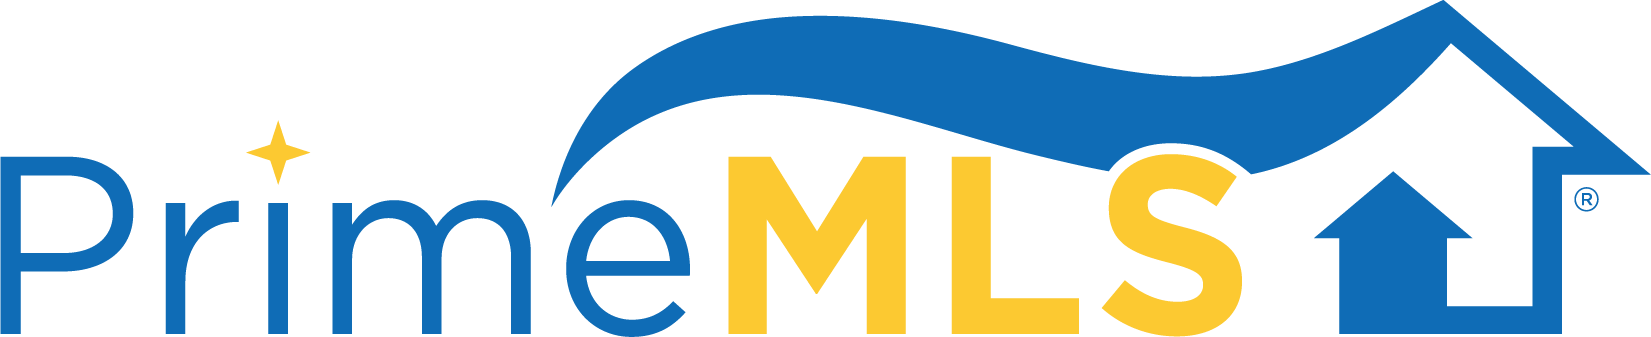 PrimeMLS logo